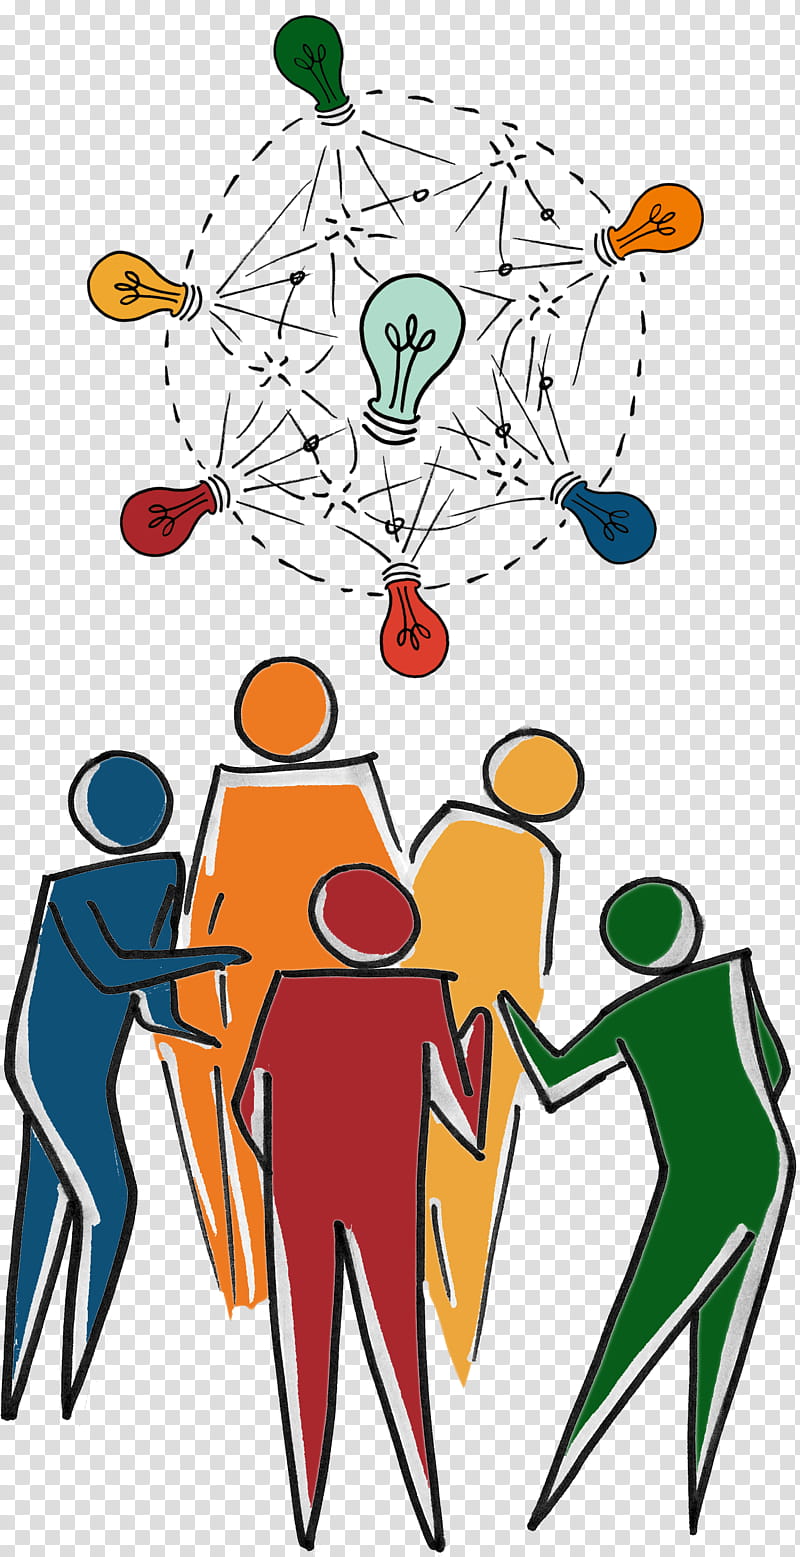 Group Of People, Deception, Speech, Speech Balloon, Logo, Management, Social Group, Line transparent background PNG clipart